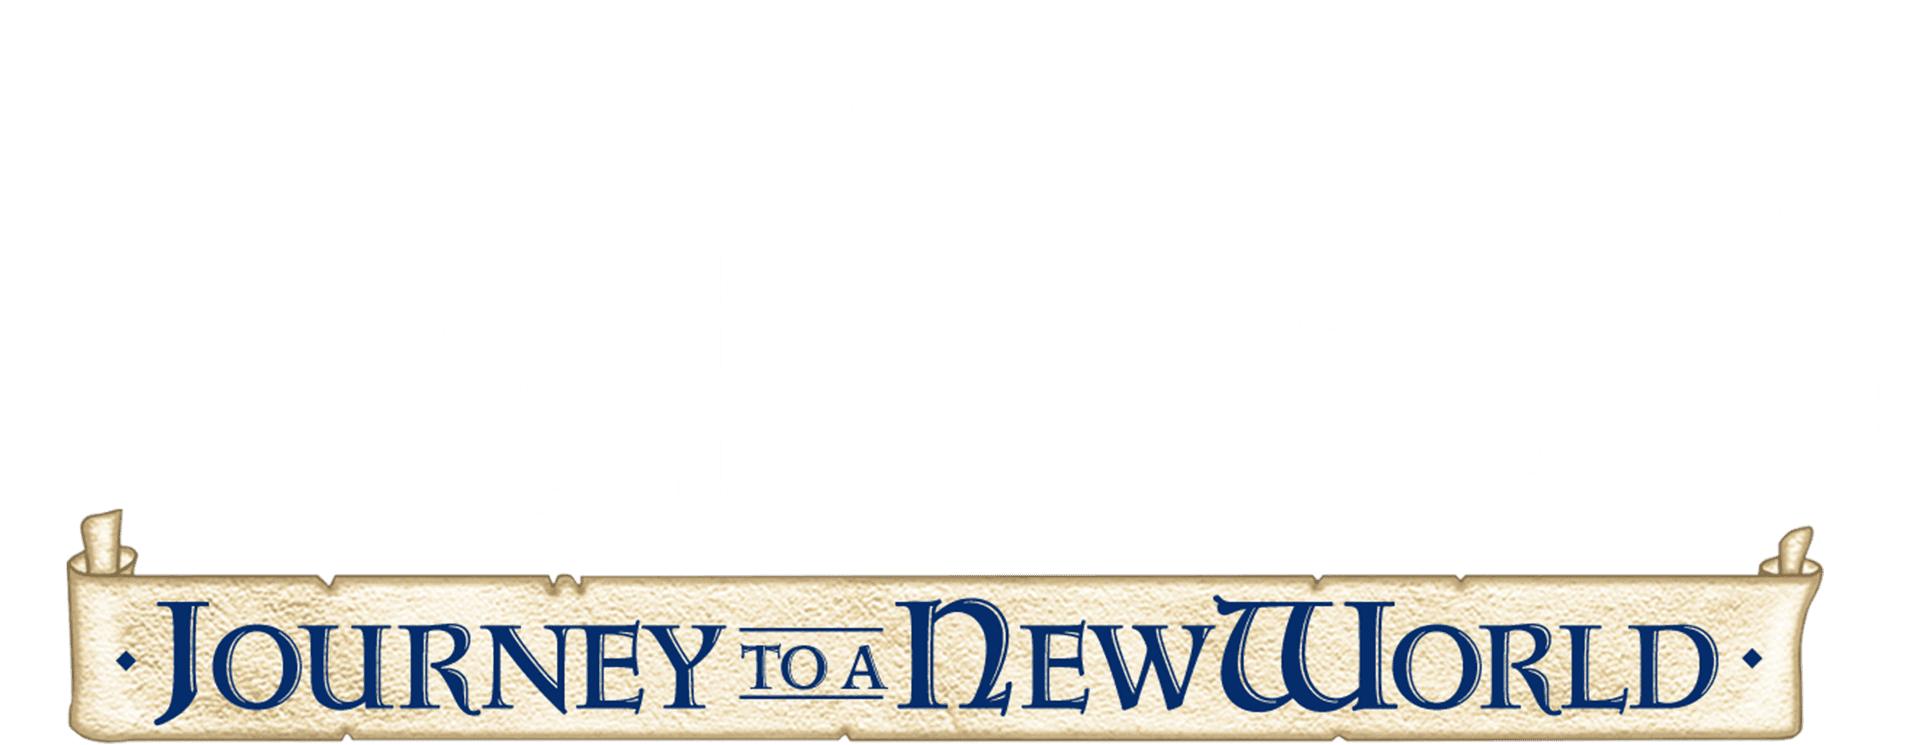 Pocahontas II: Journey to a New World logo